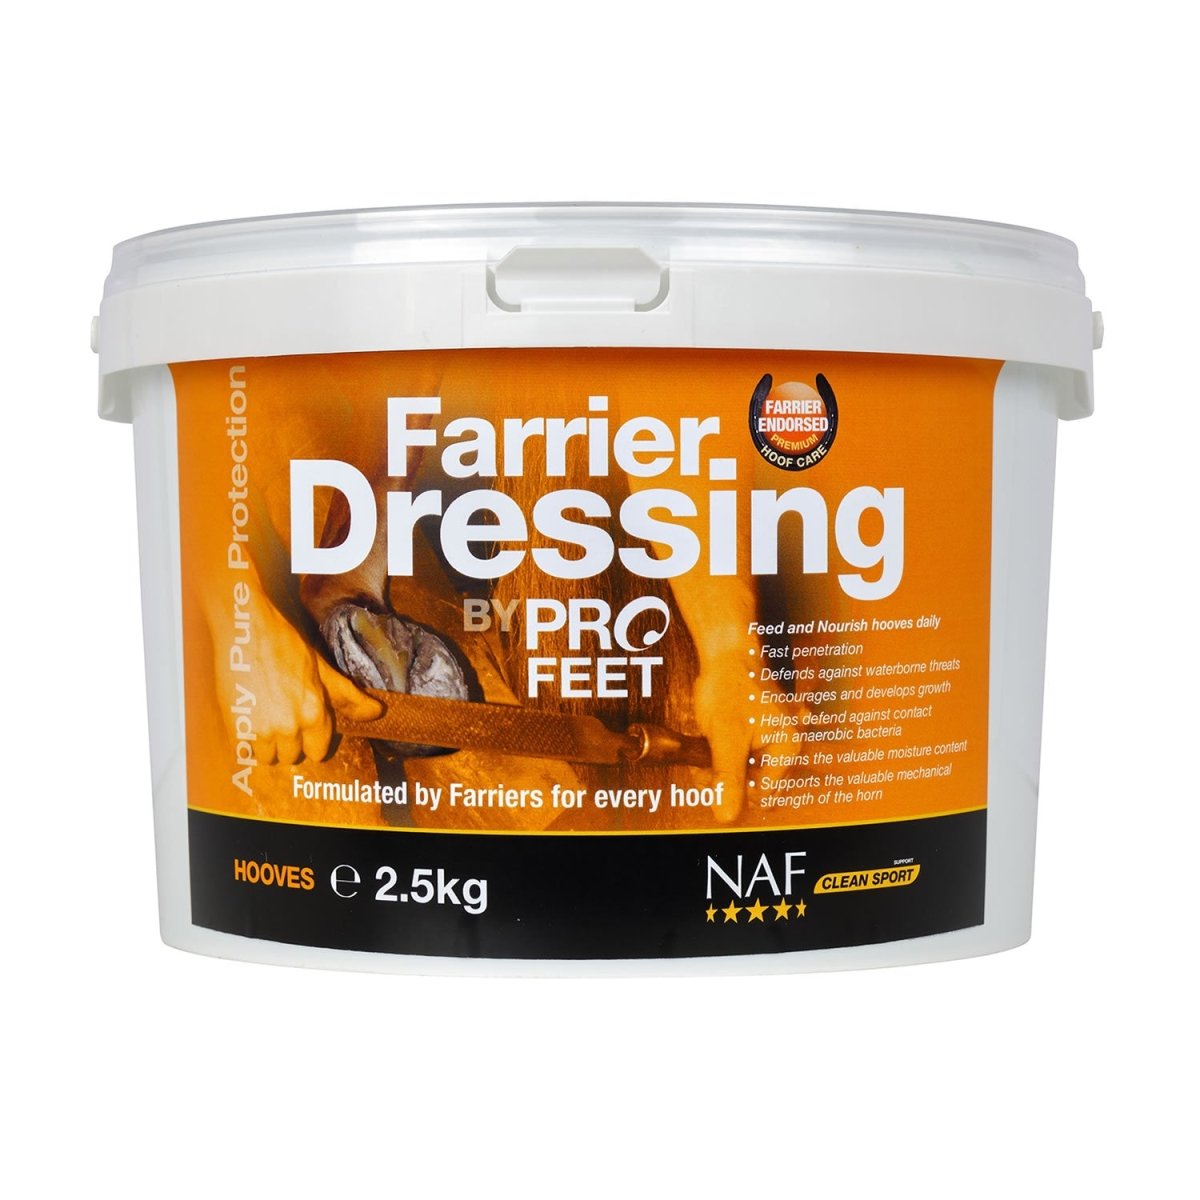 Naf Five Star Profeet Farrier Dressing - 2.5Kg -